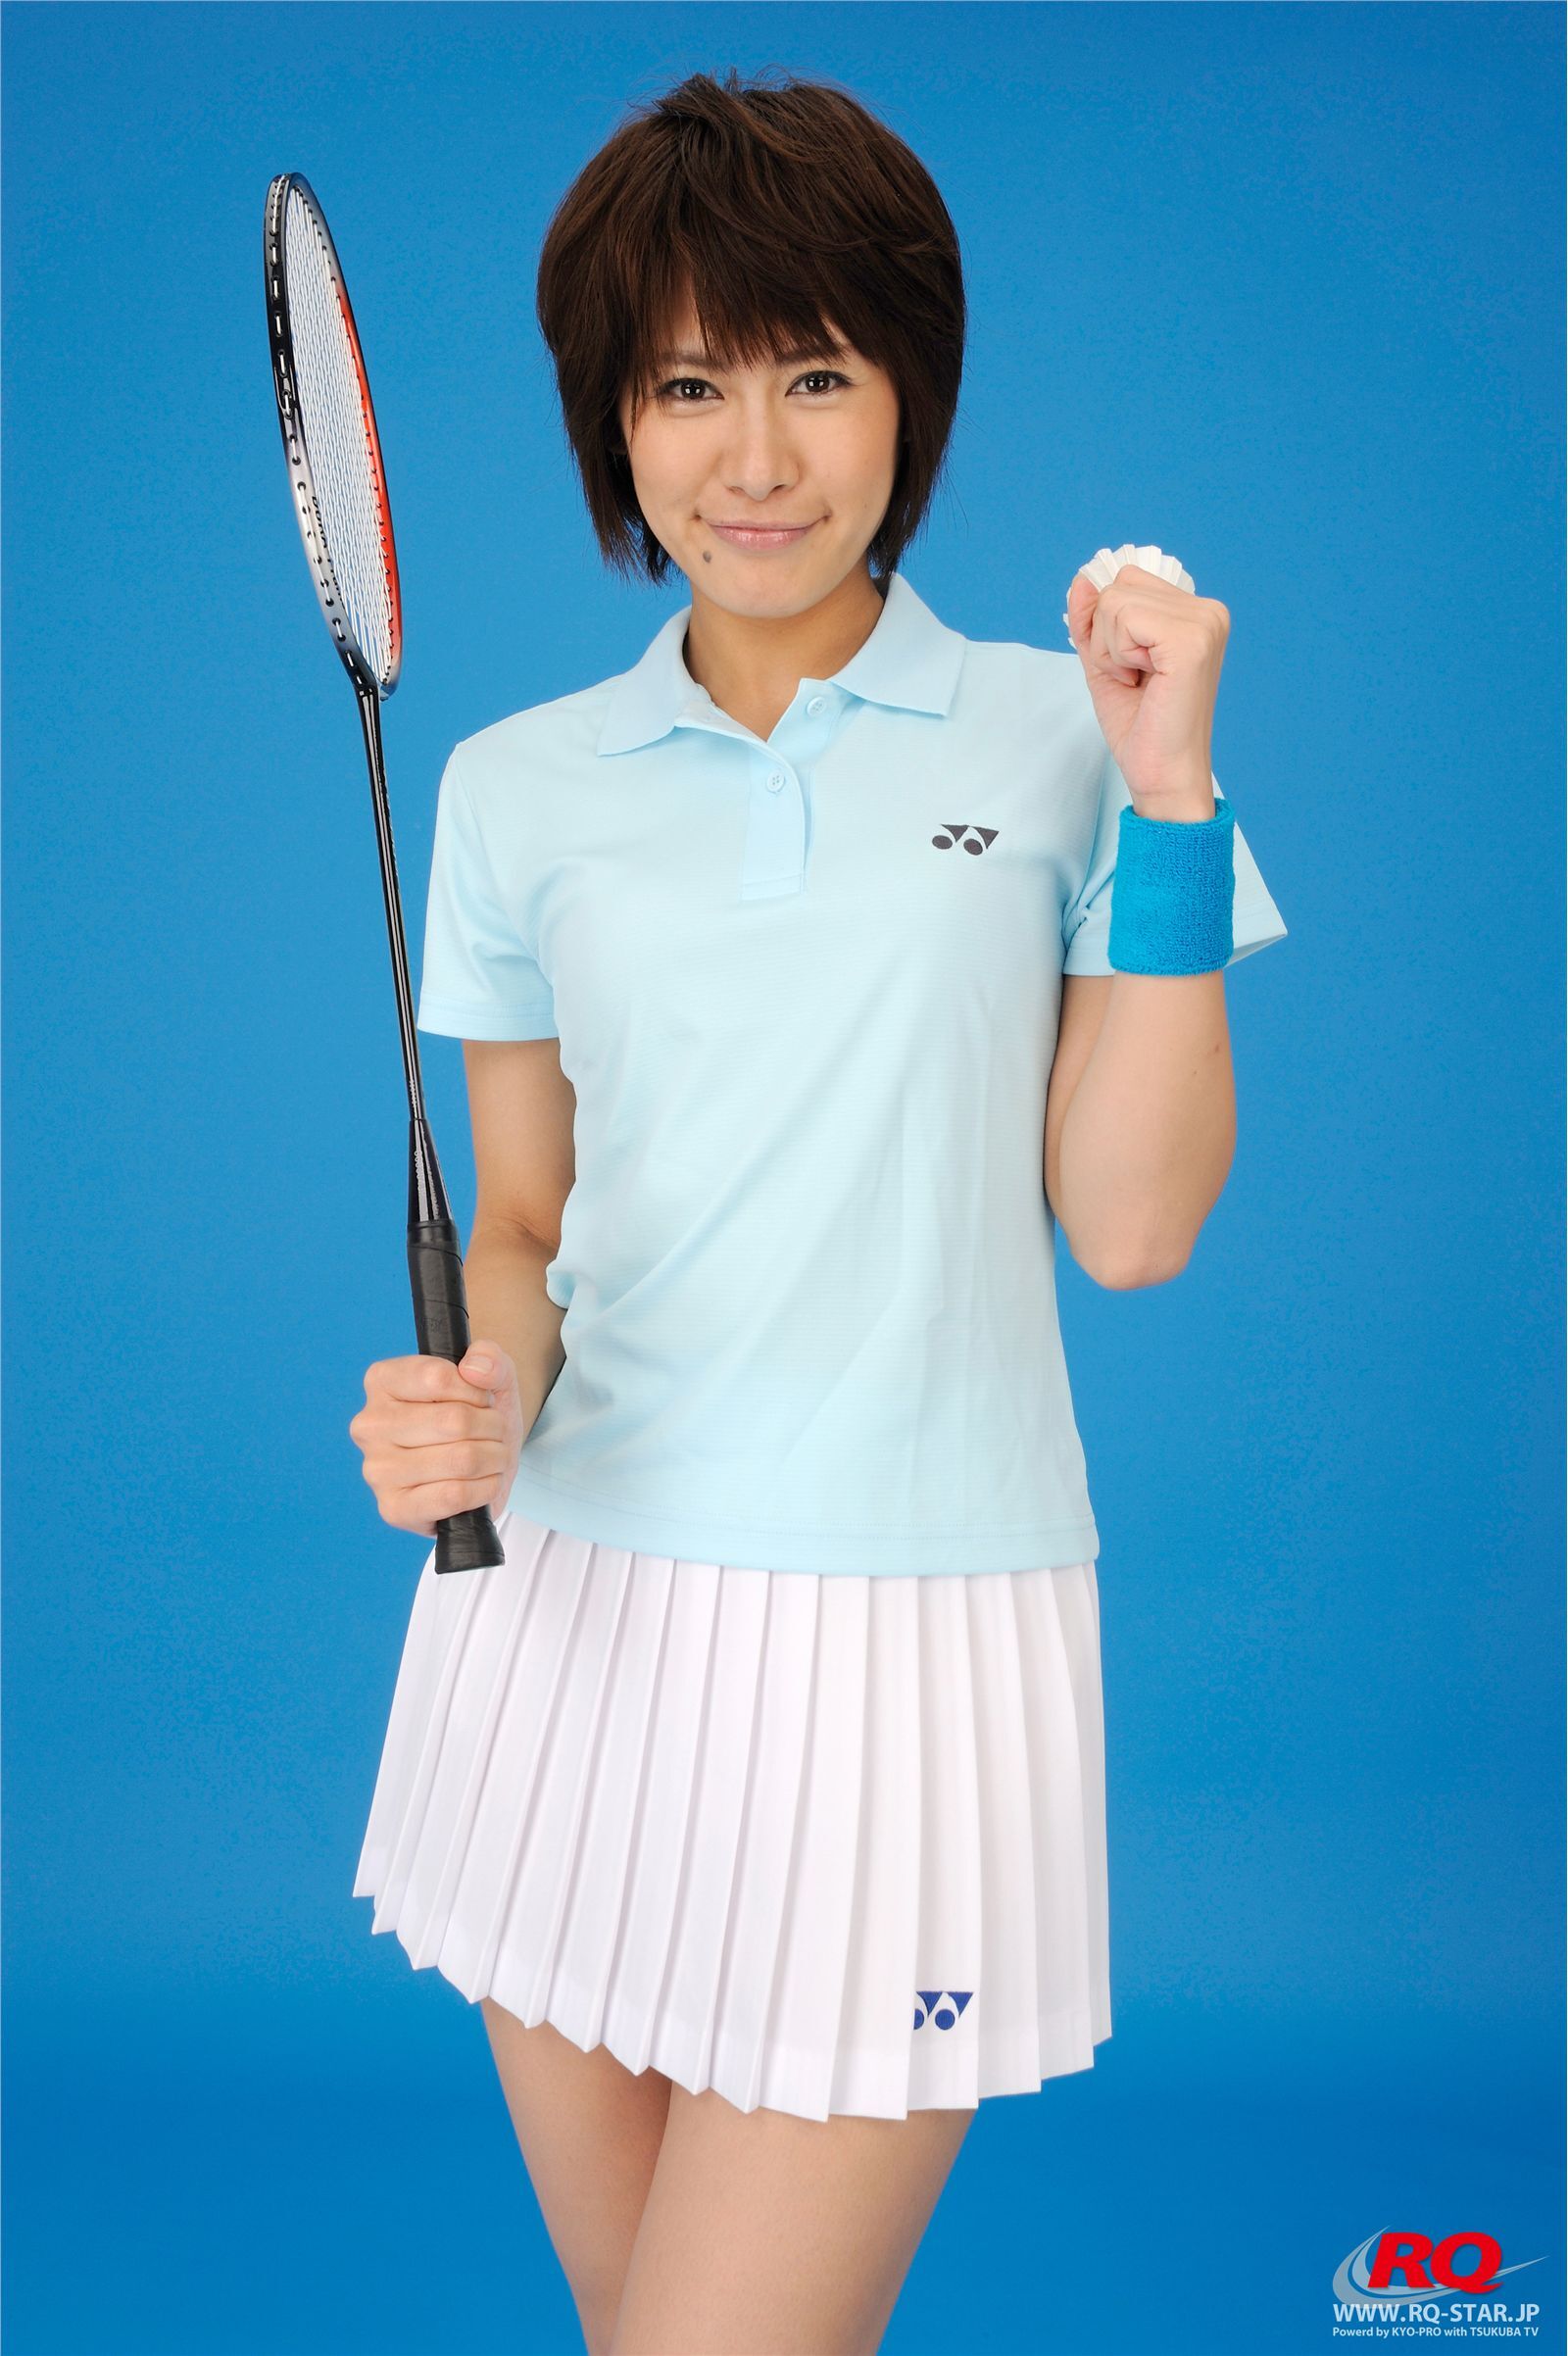 Rq-star Fujiwara Akiko badmenton wear no.00081 Japan HD uniform beauty photo